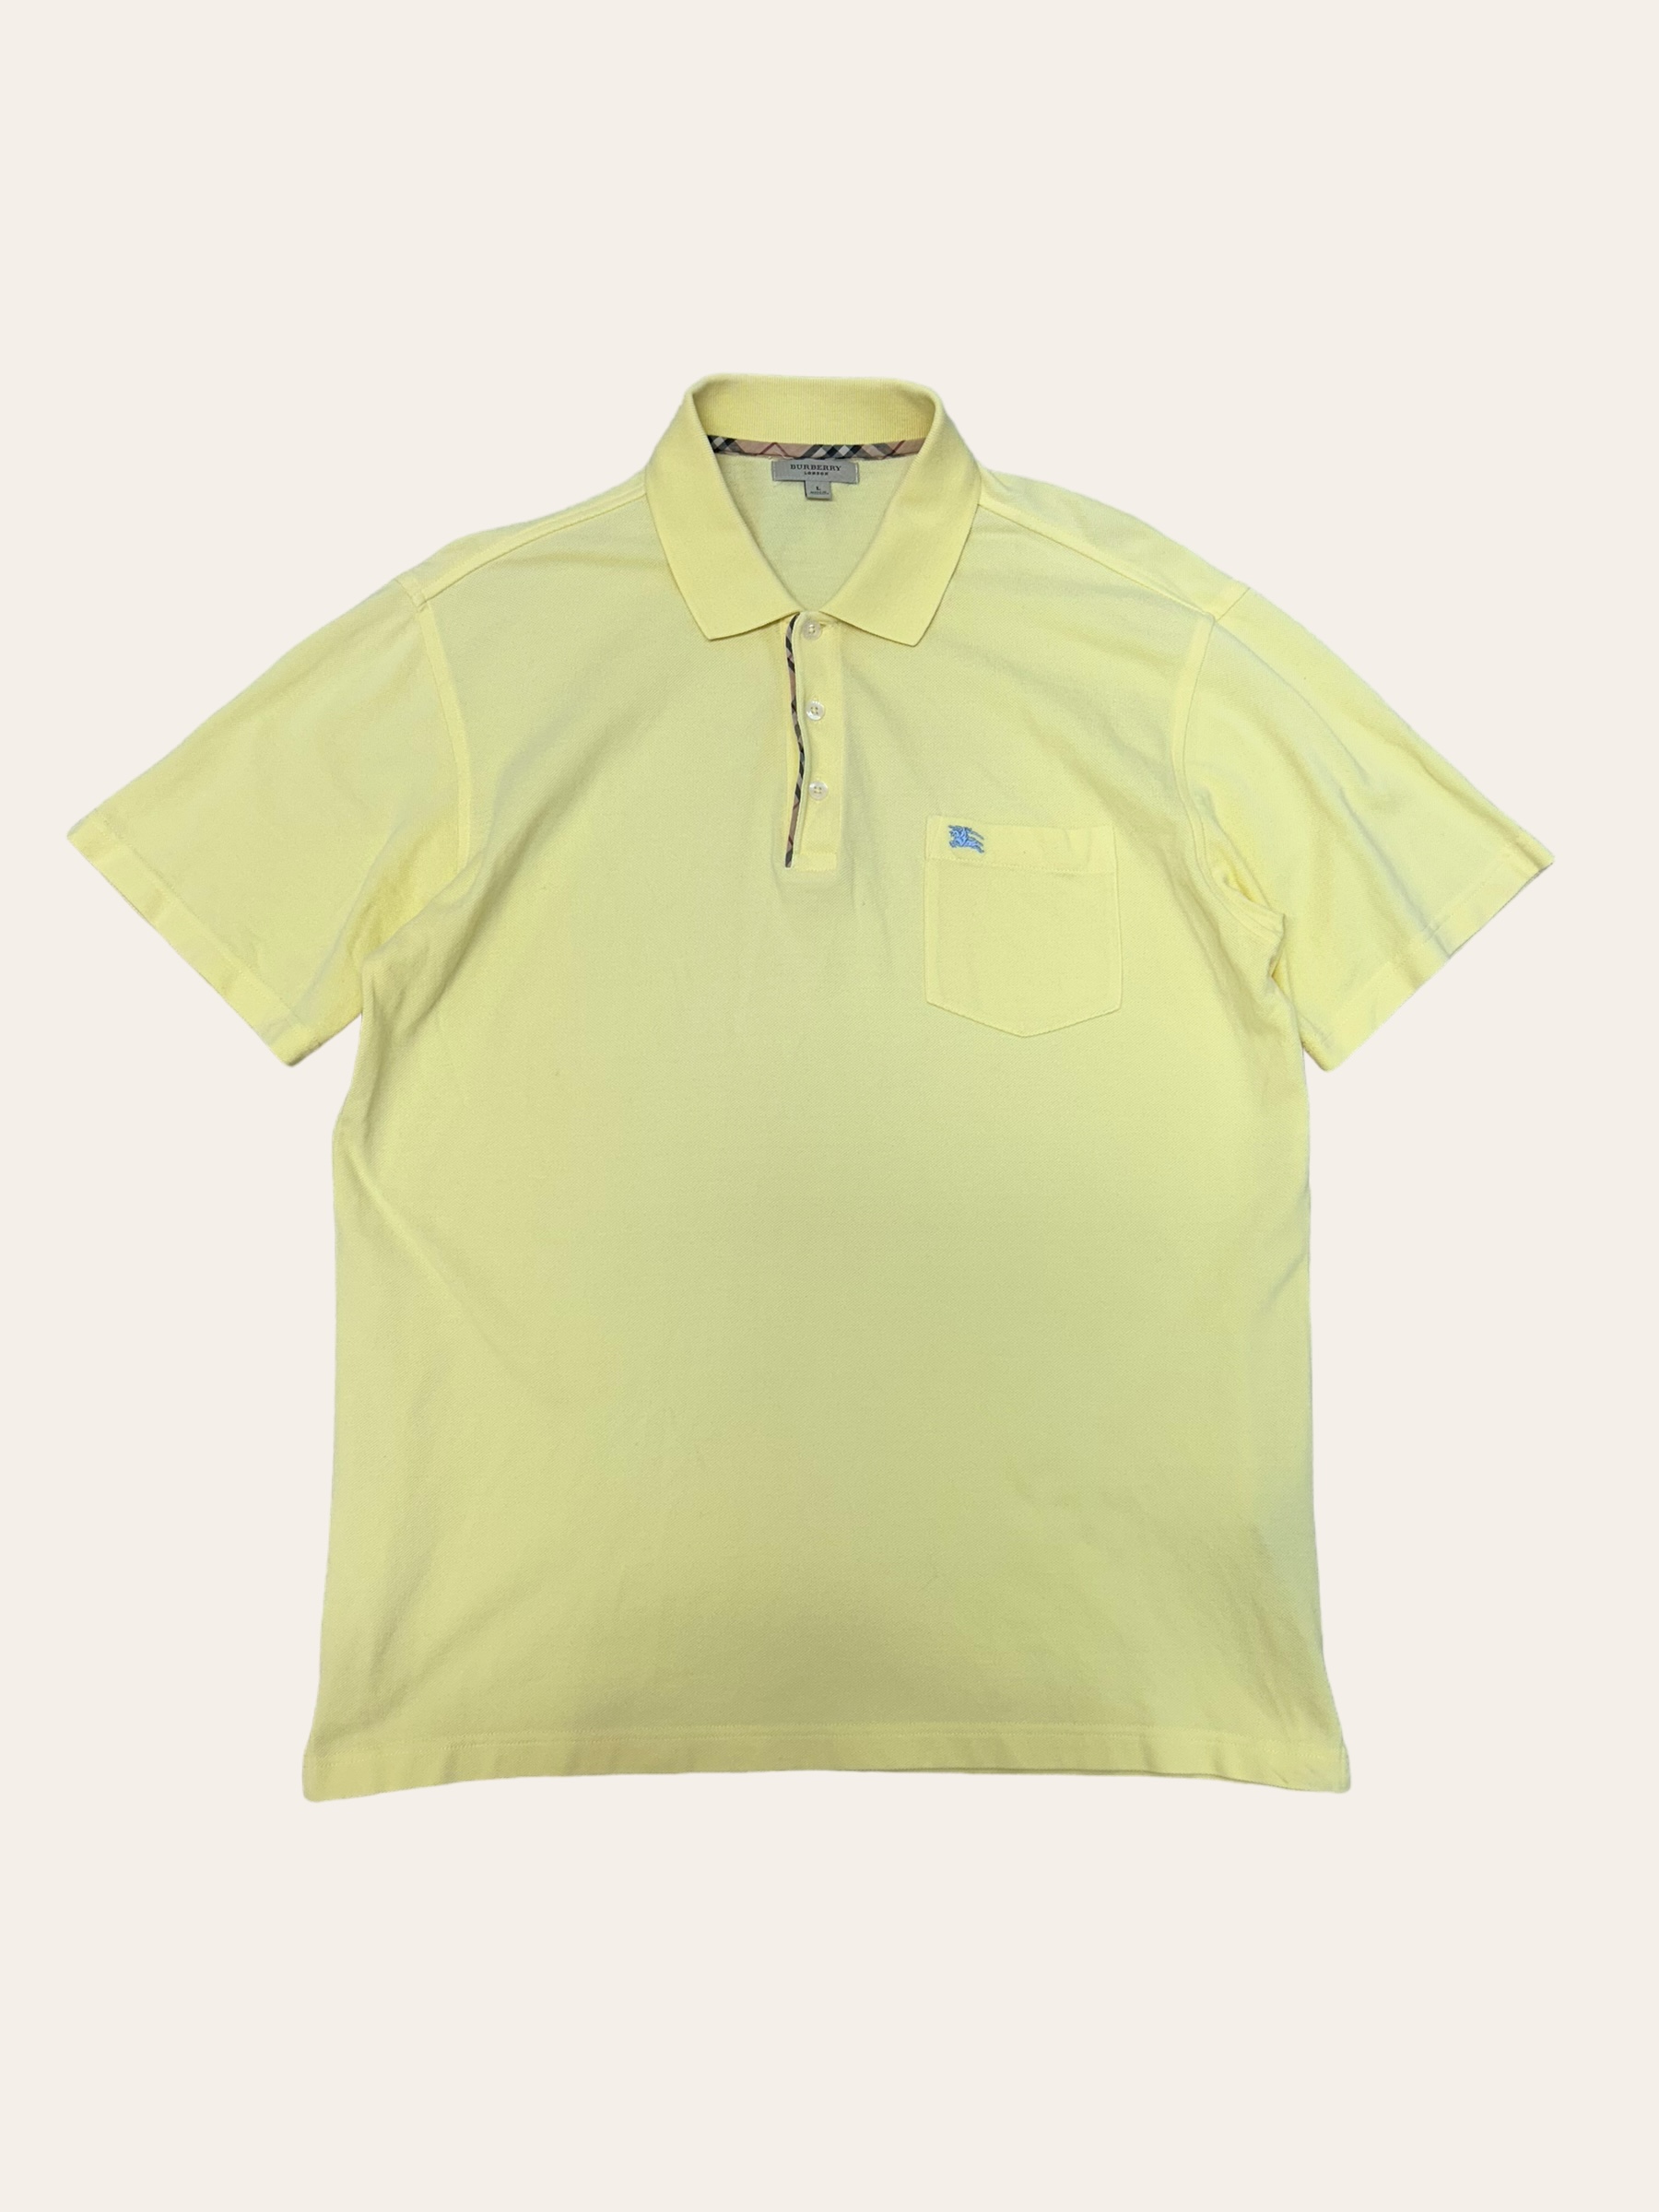 Burberry yellow pocket PK-shirt L